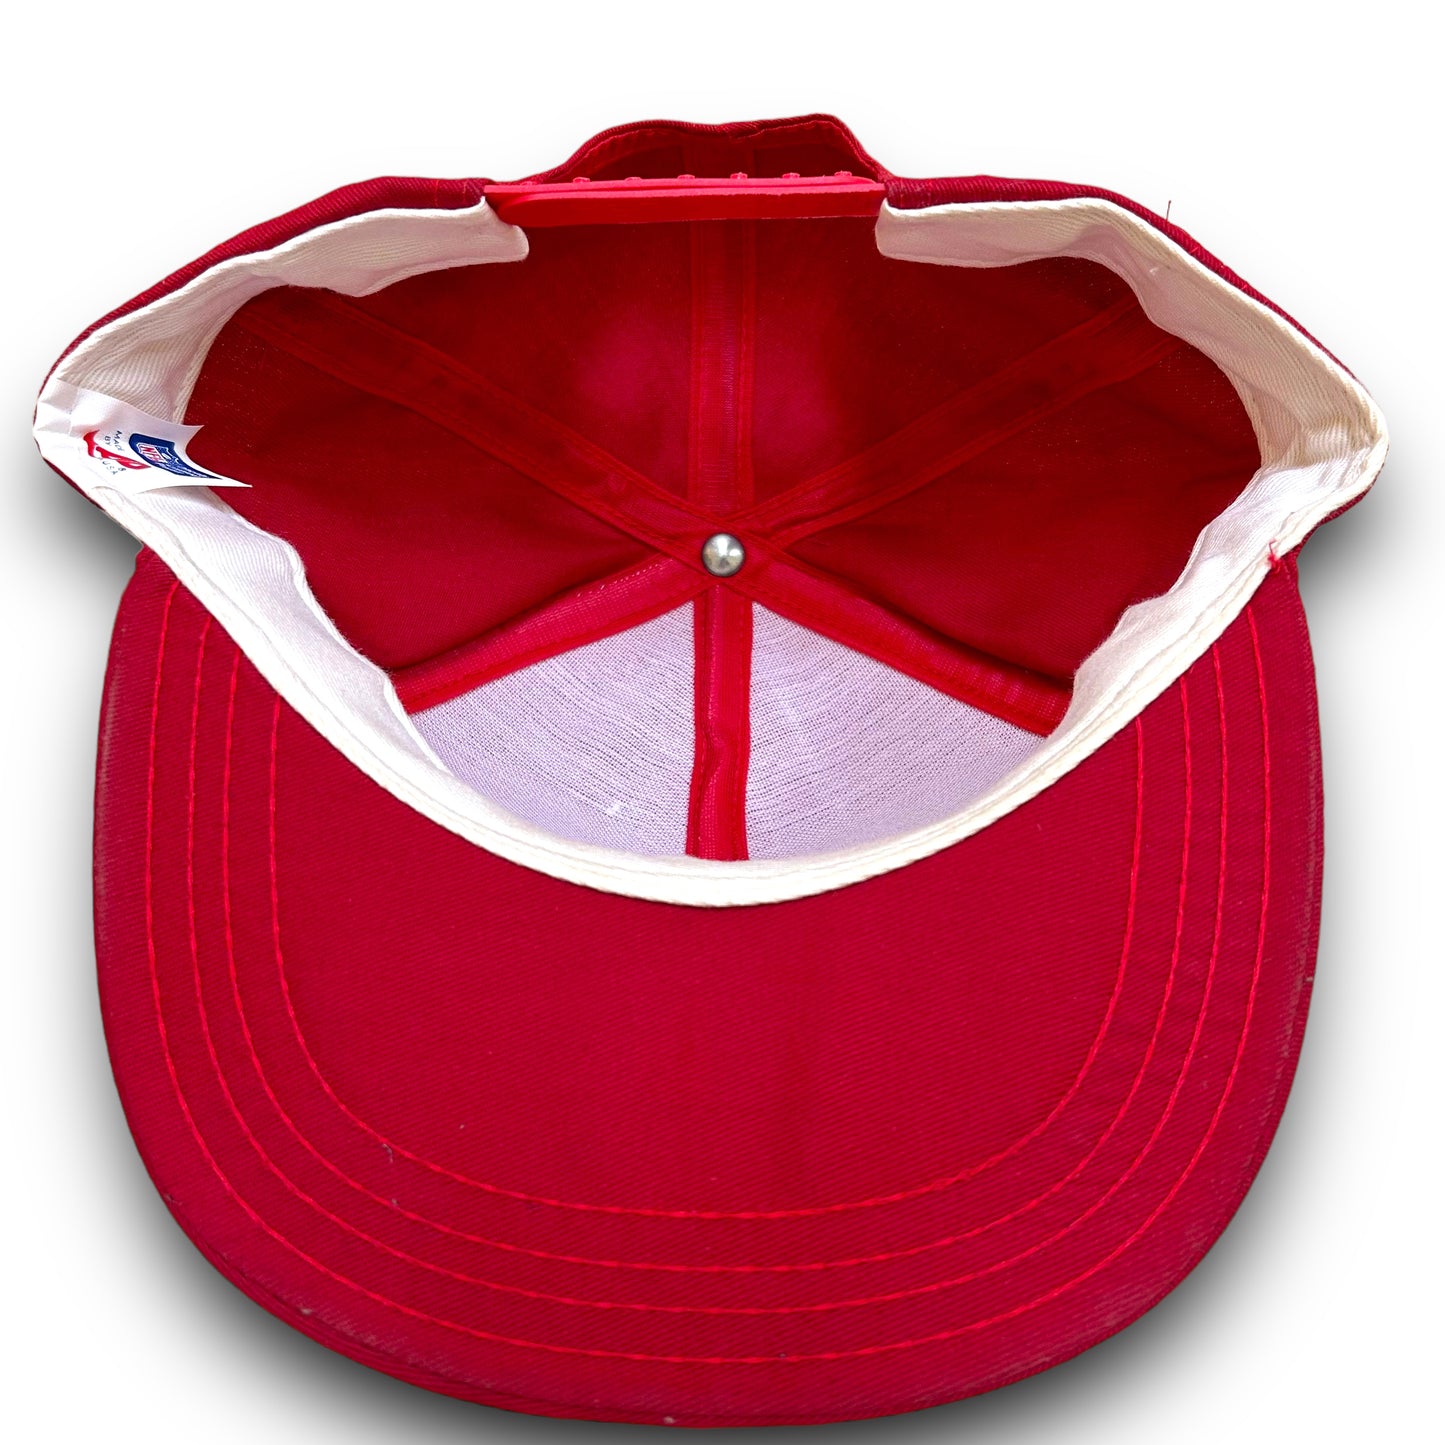 Vintage 1990s San Francisco 49ers Embroidered Red Snapback Hat